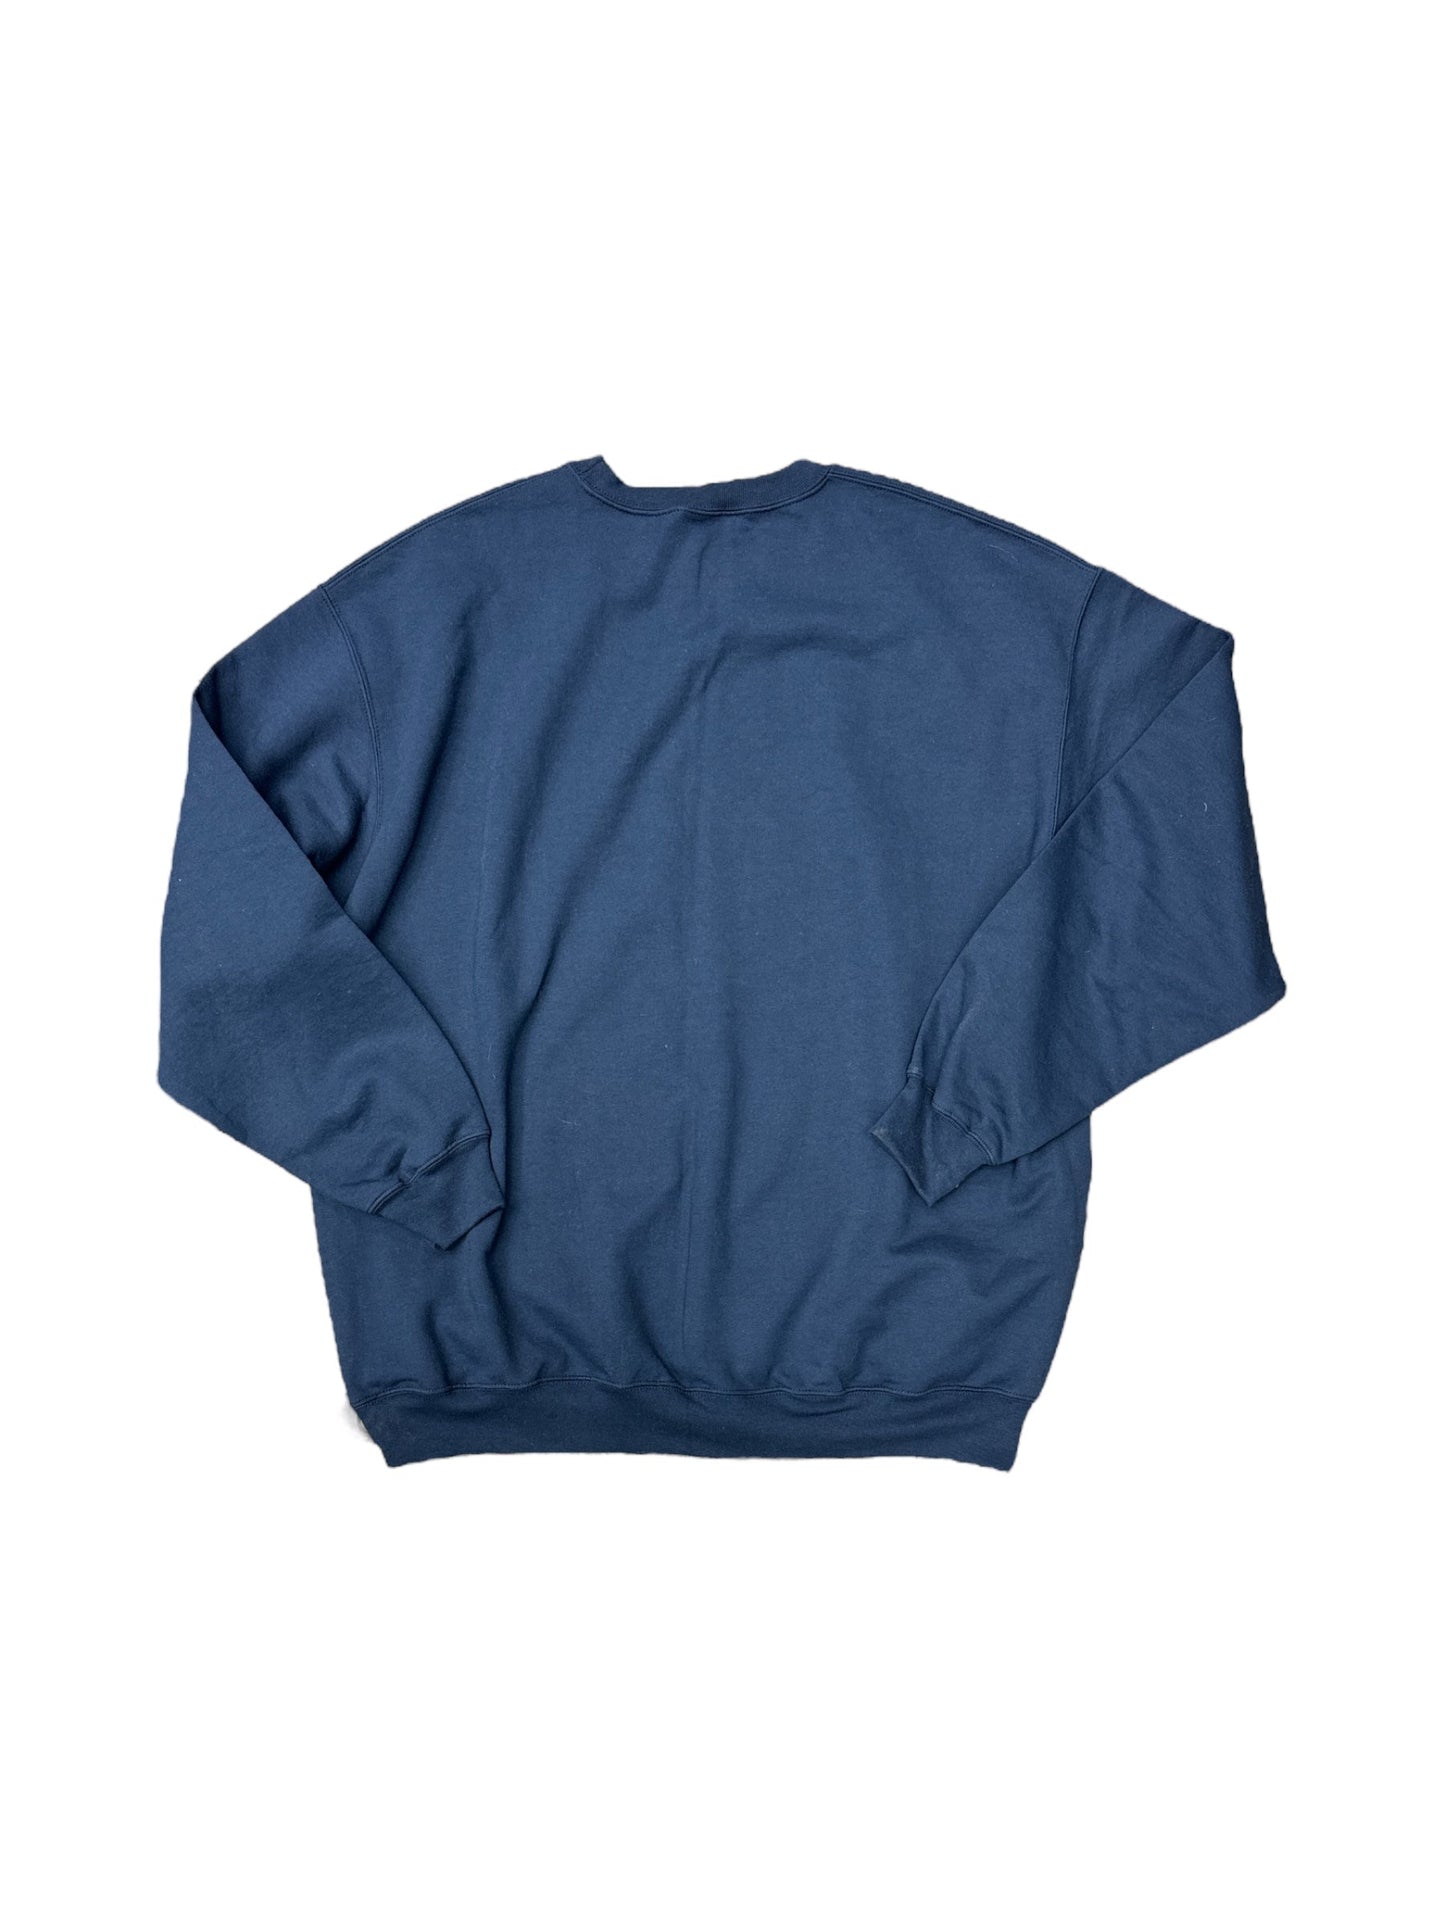 Navy Sweatshirt Crewneck Clothes Mentor, Size 2x